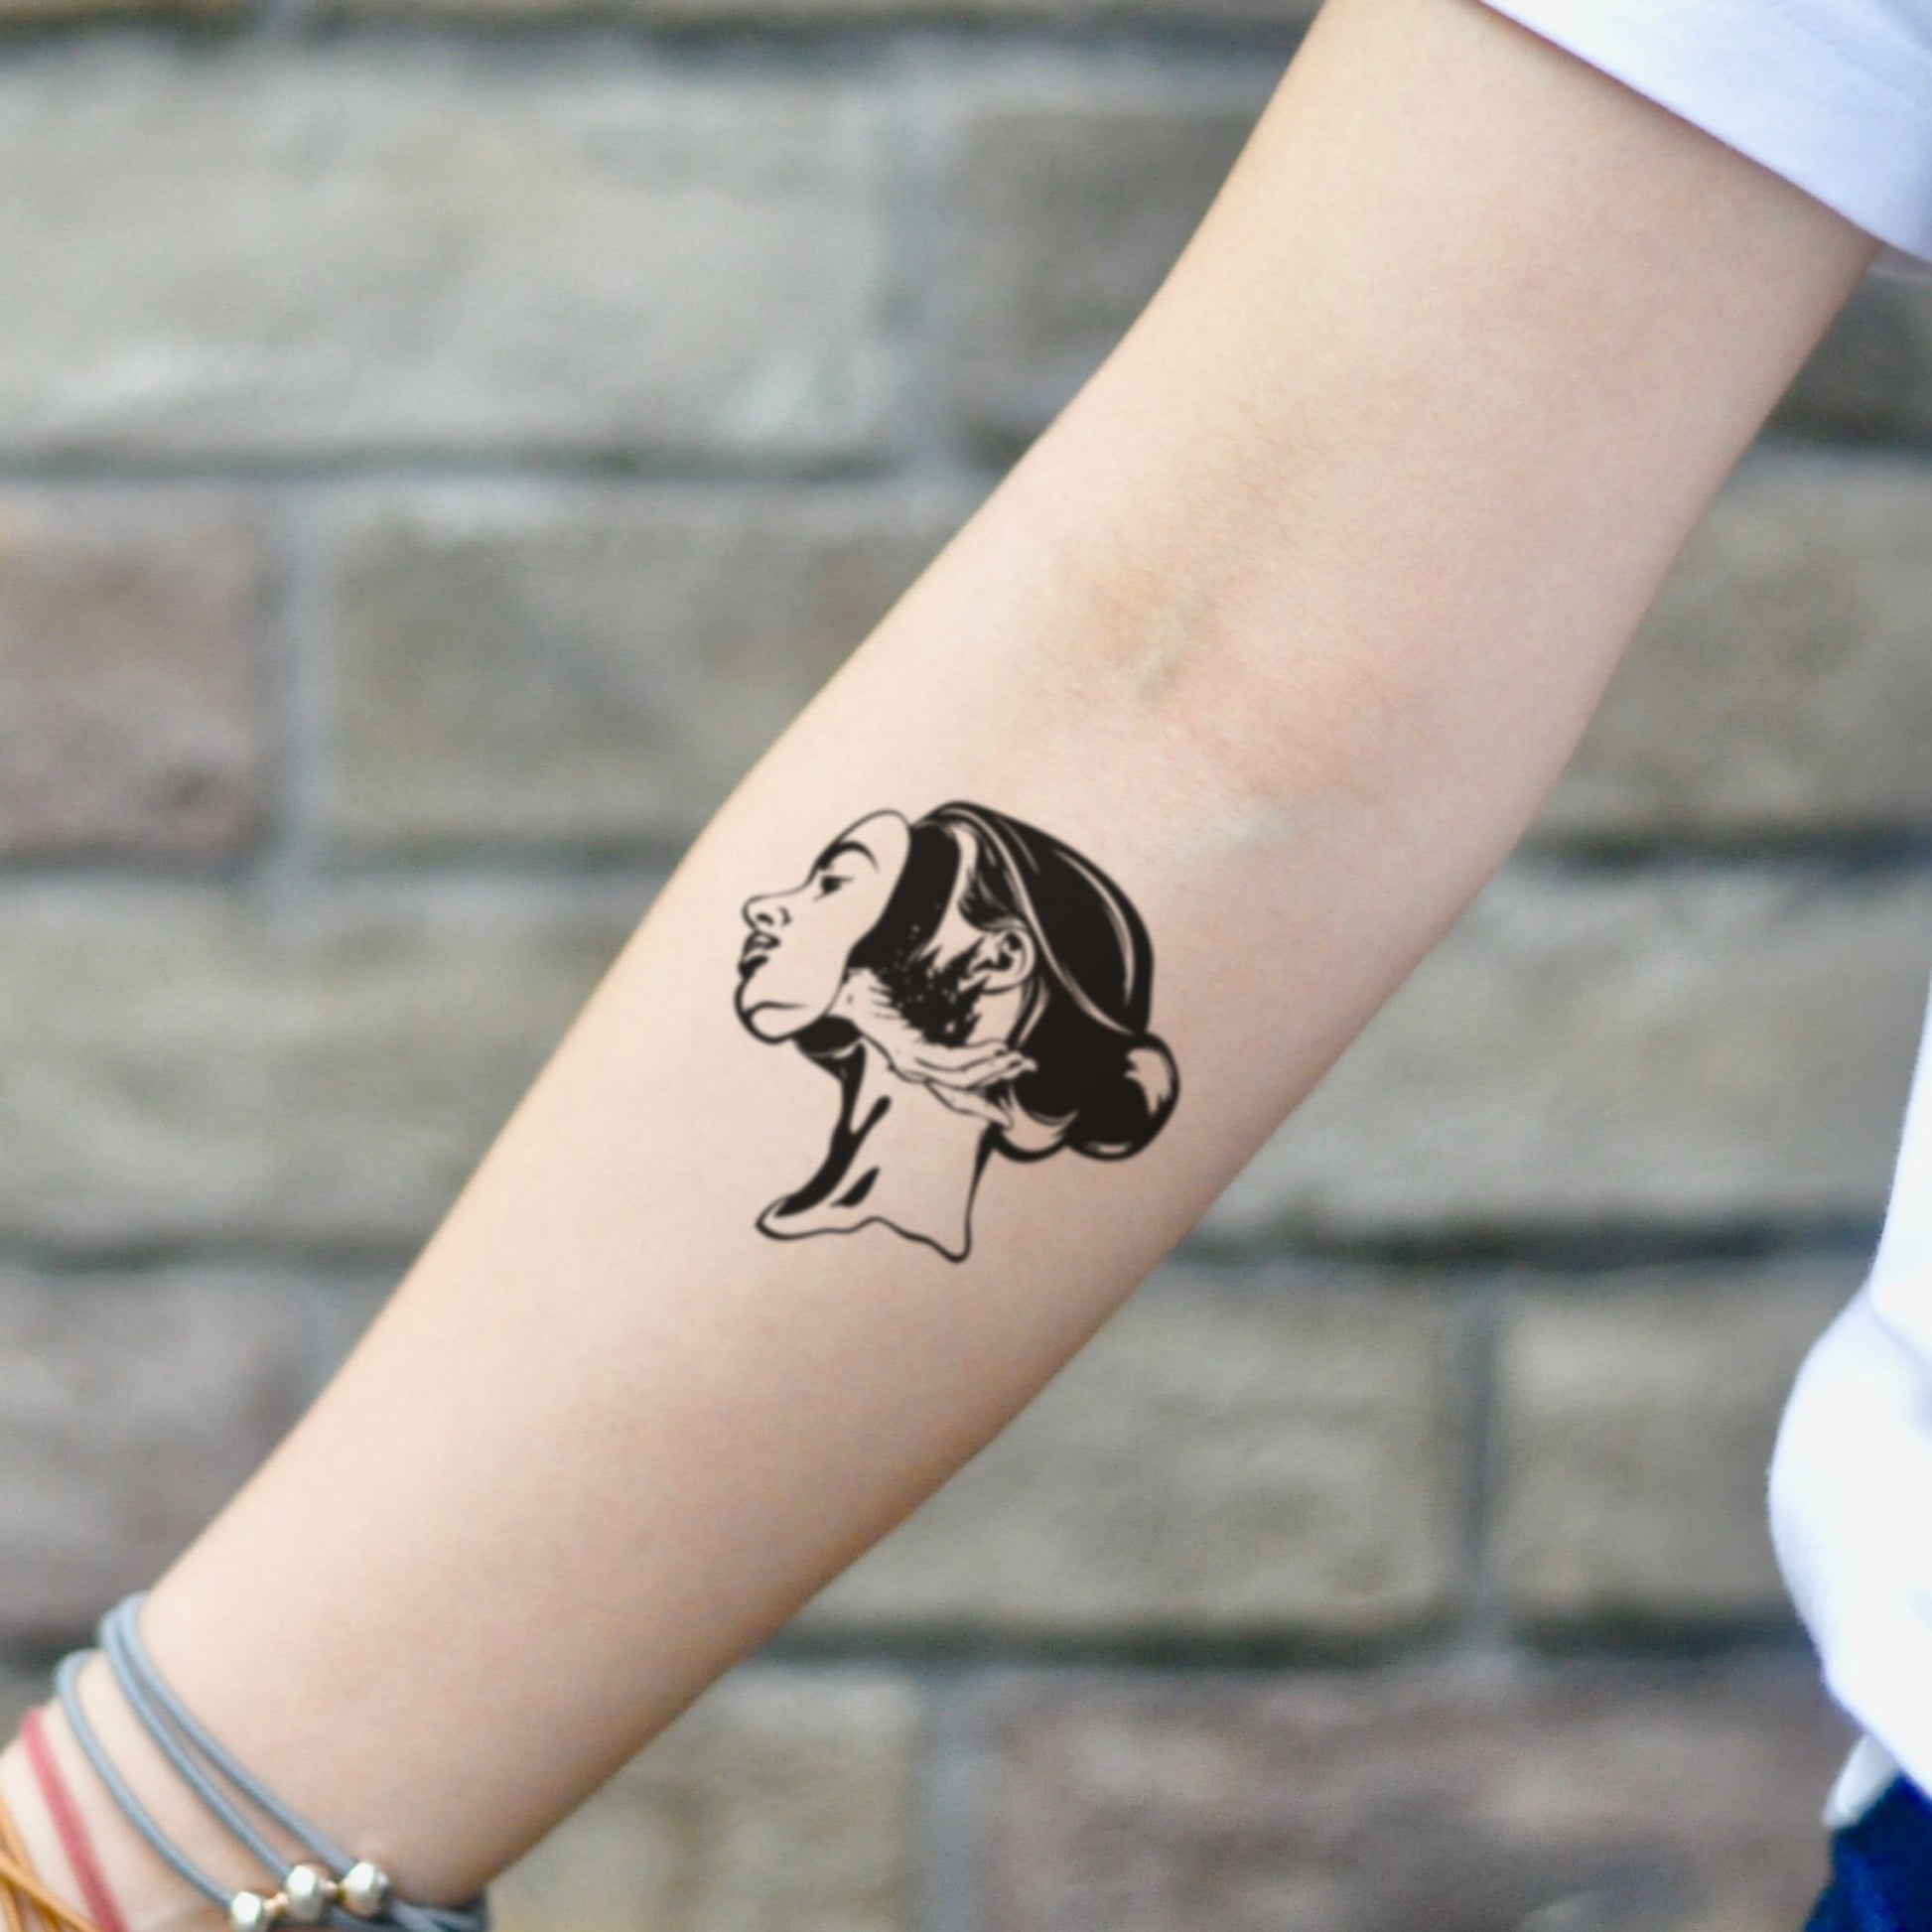 fake small sad girl surrealism abstract art illustrative temporary tattoo sticker design idea on inner arm